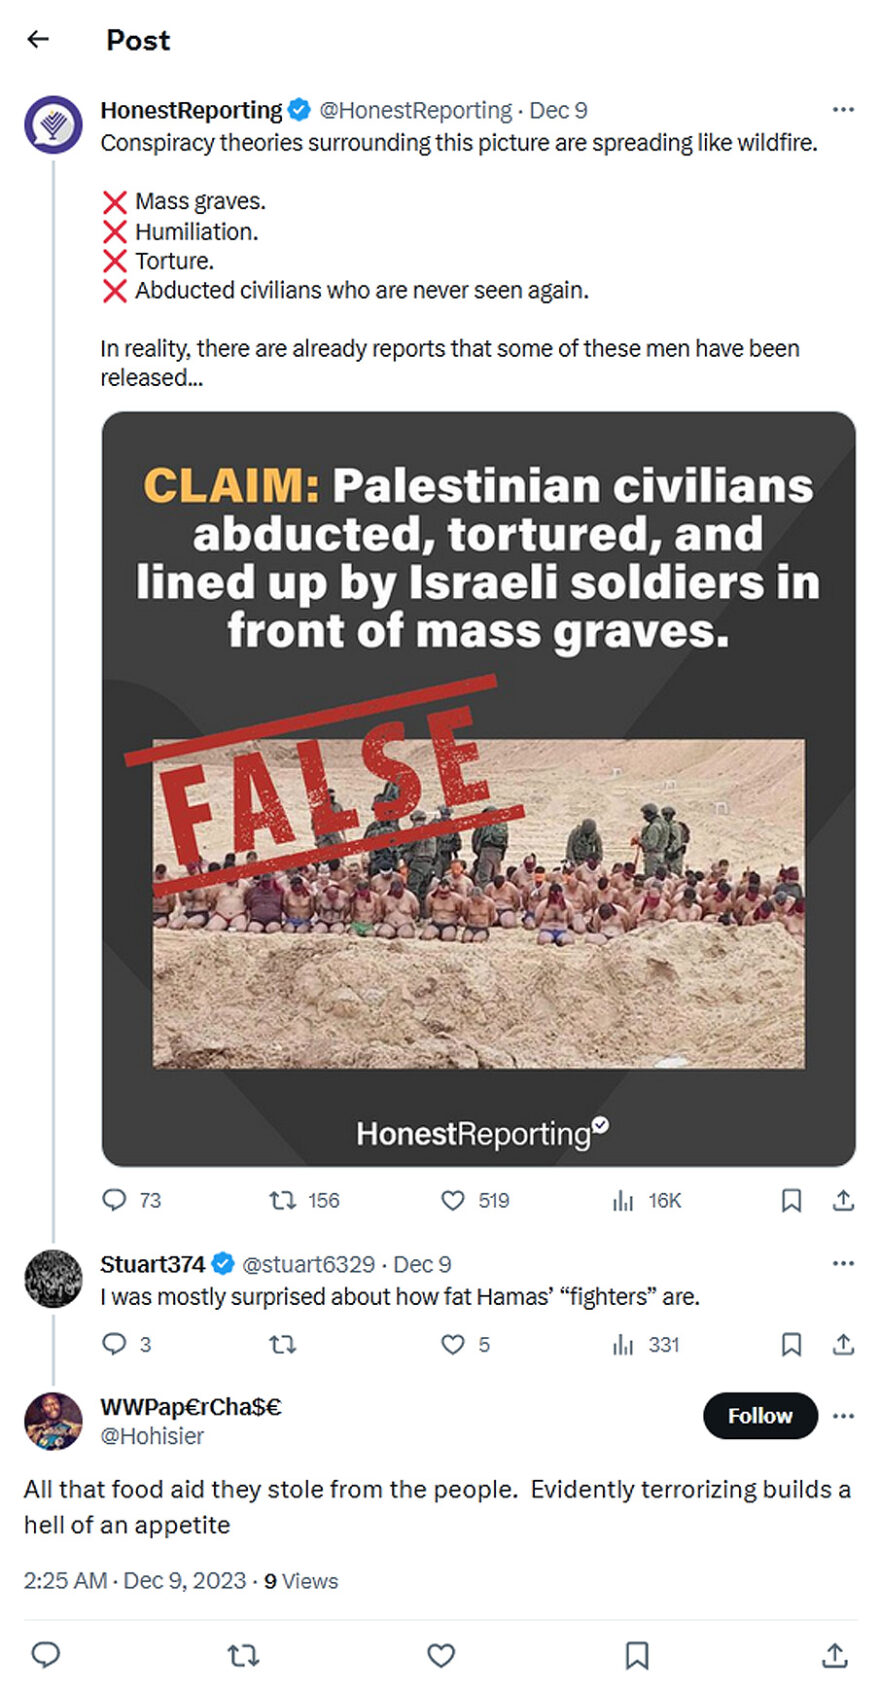 HonestReporting-tweet-9December2023-Captured Hamas Terrorist: False Claims